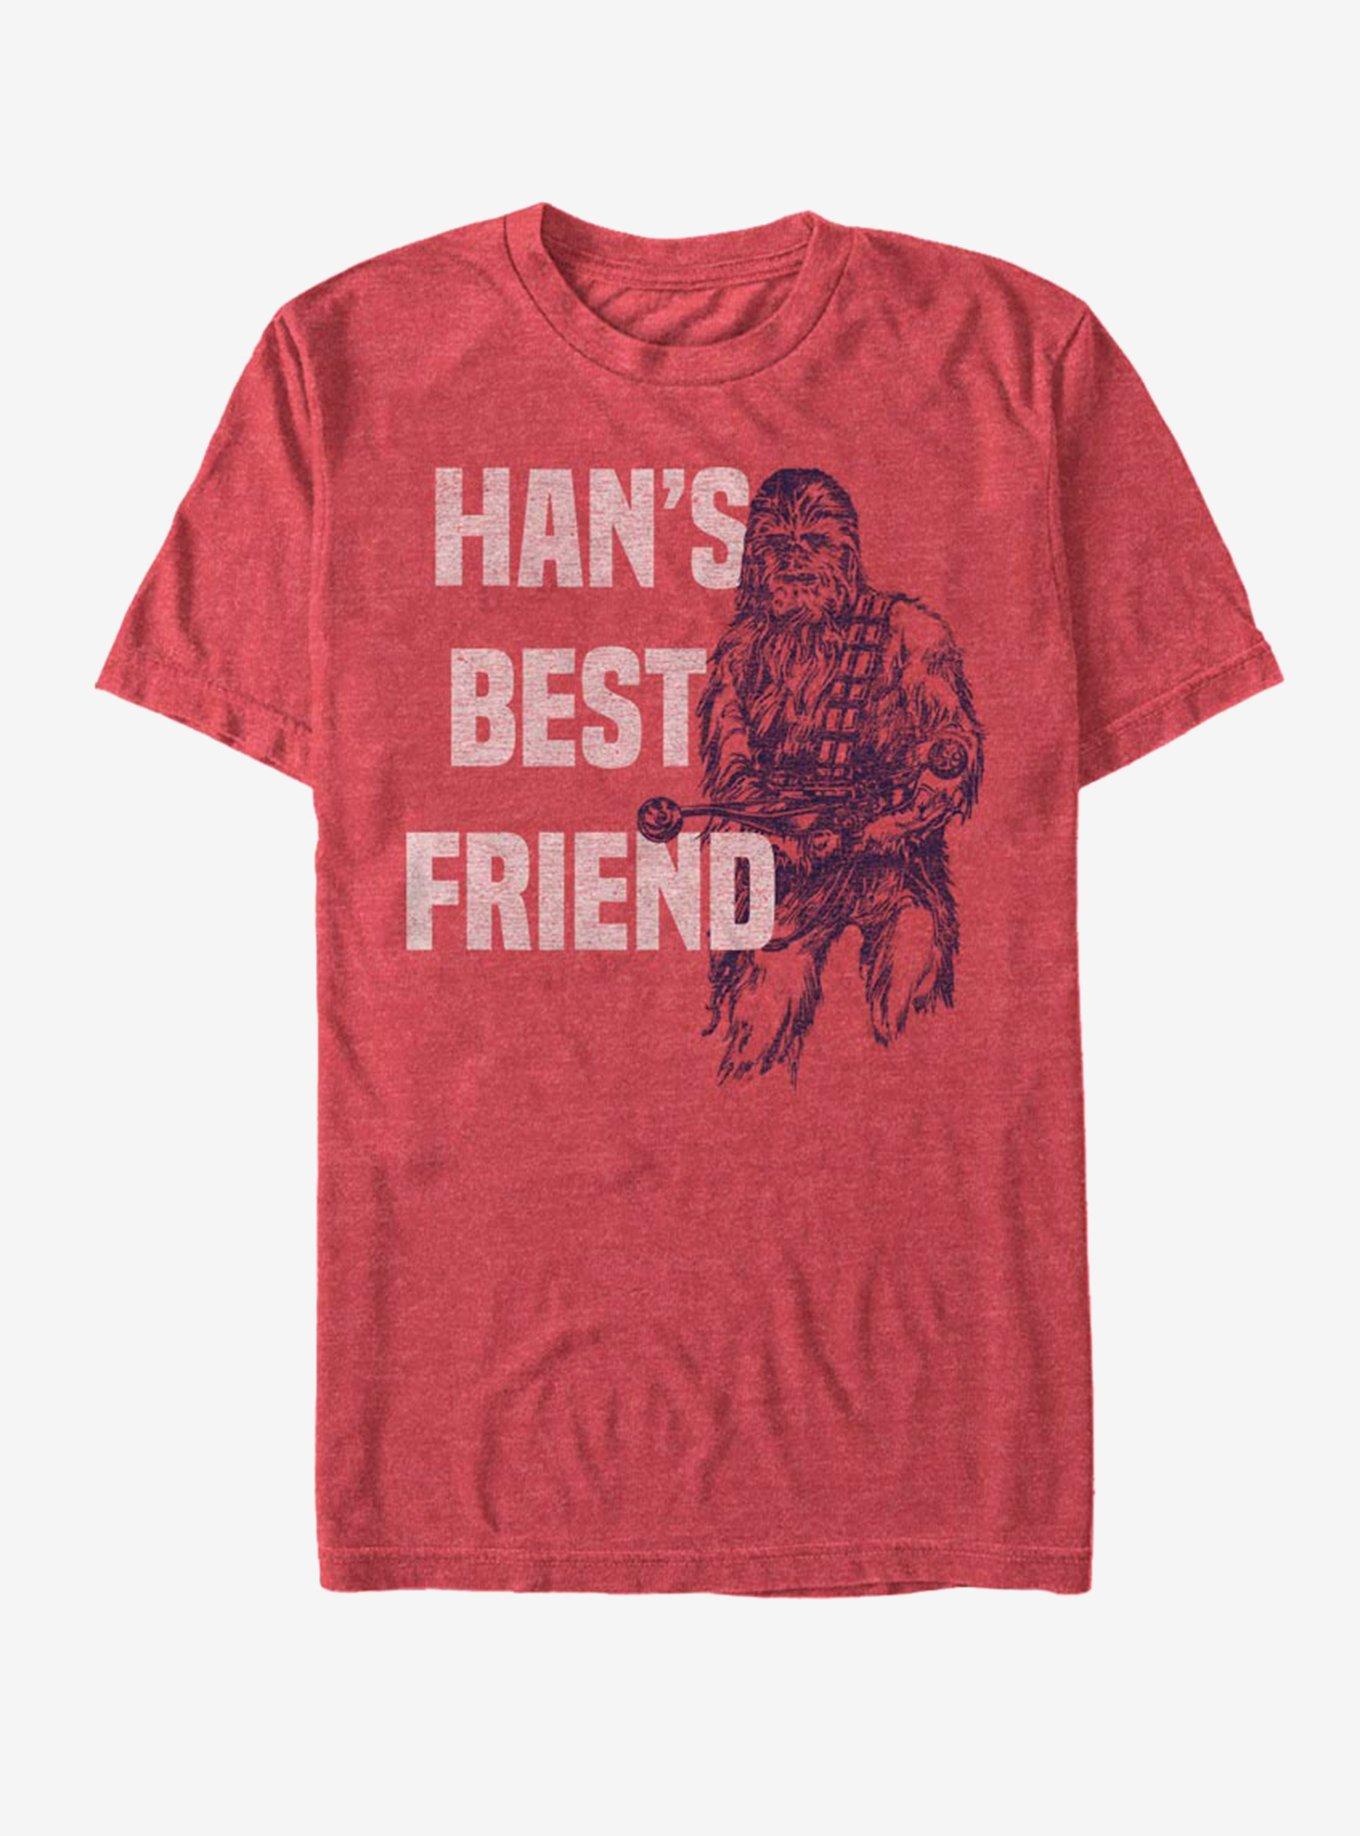 Star Wars Man's Best Friend T-Shirt